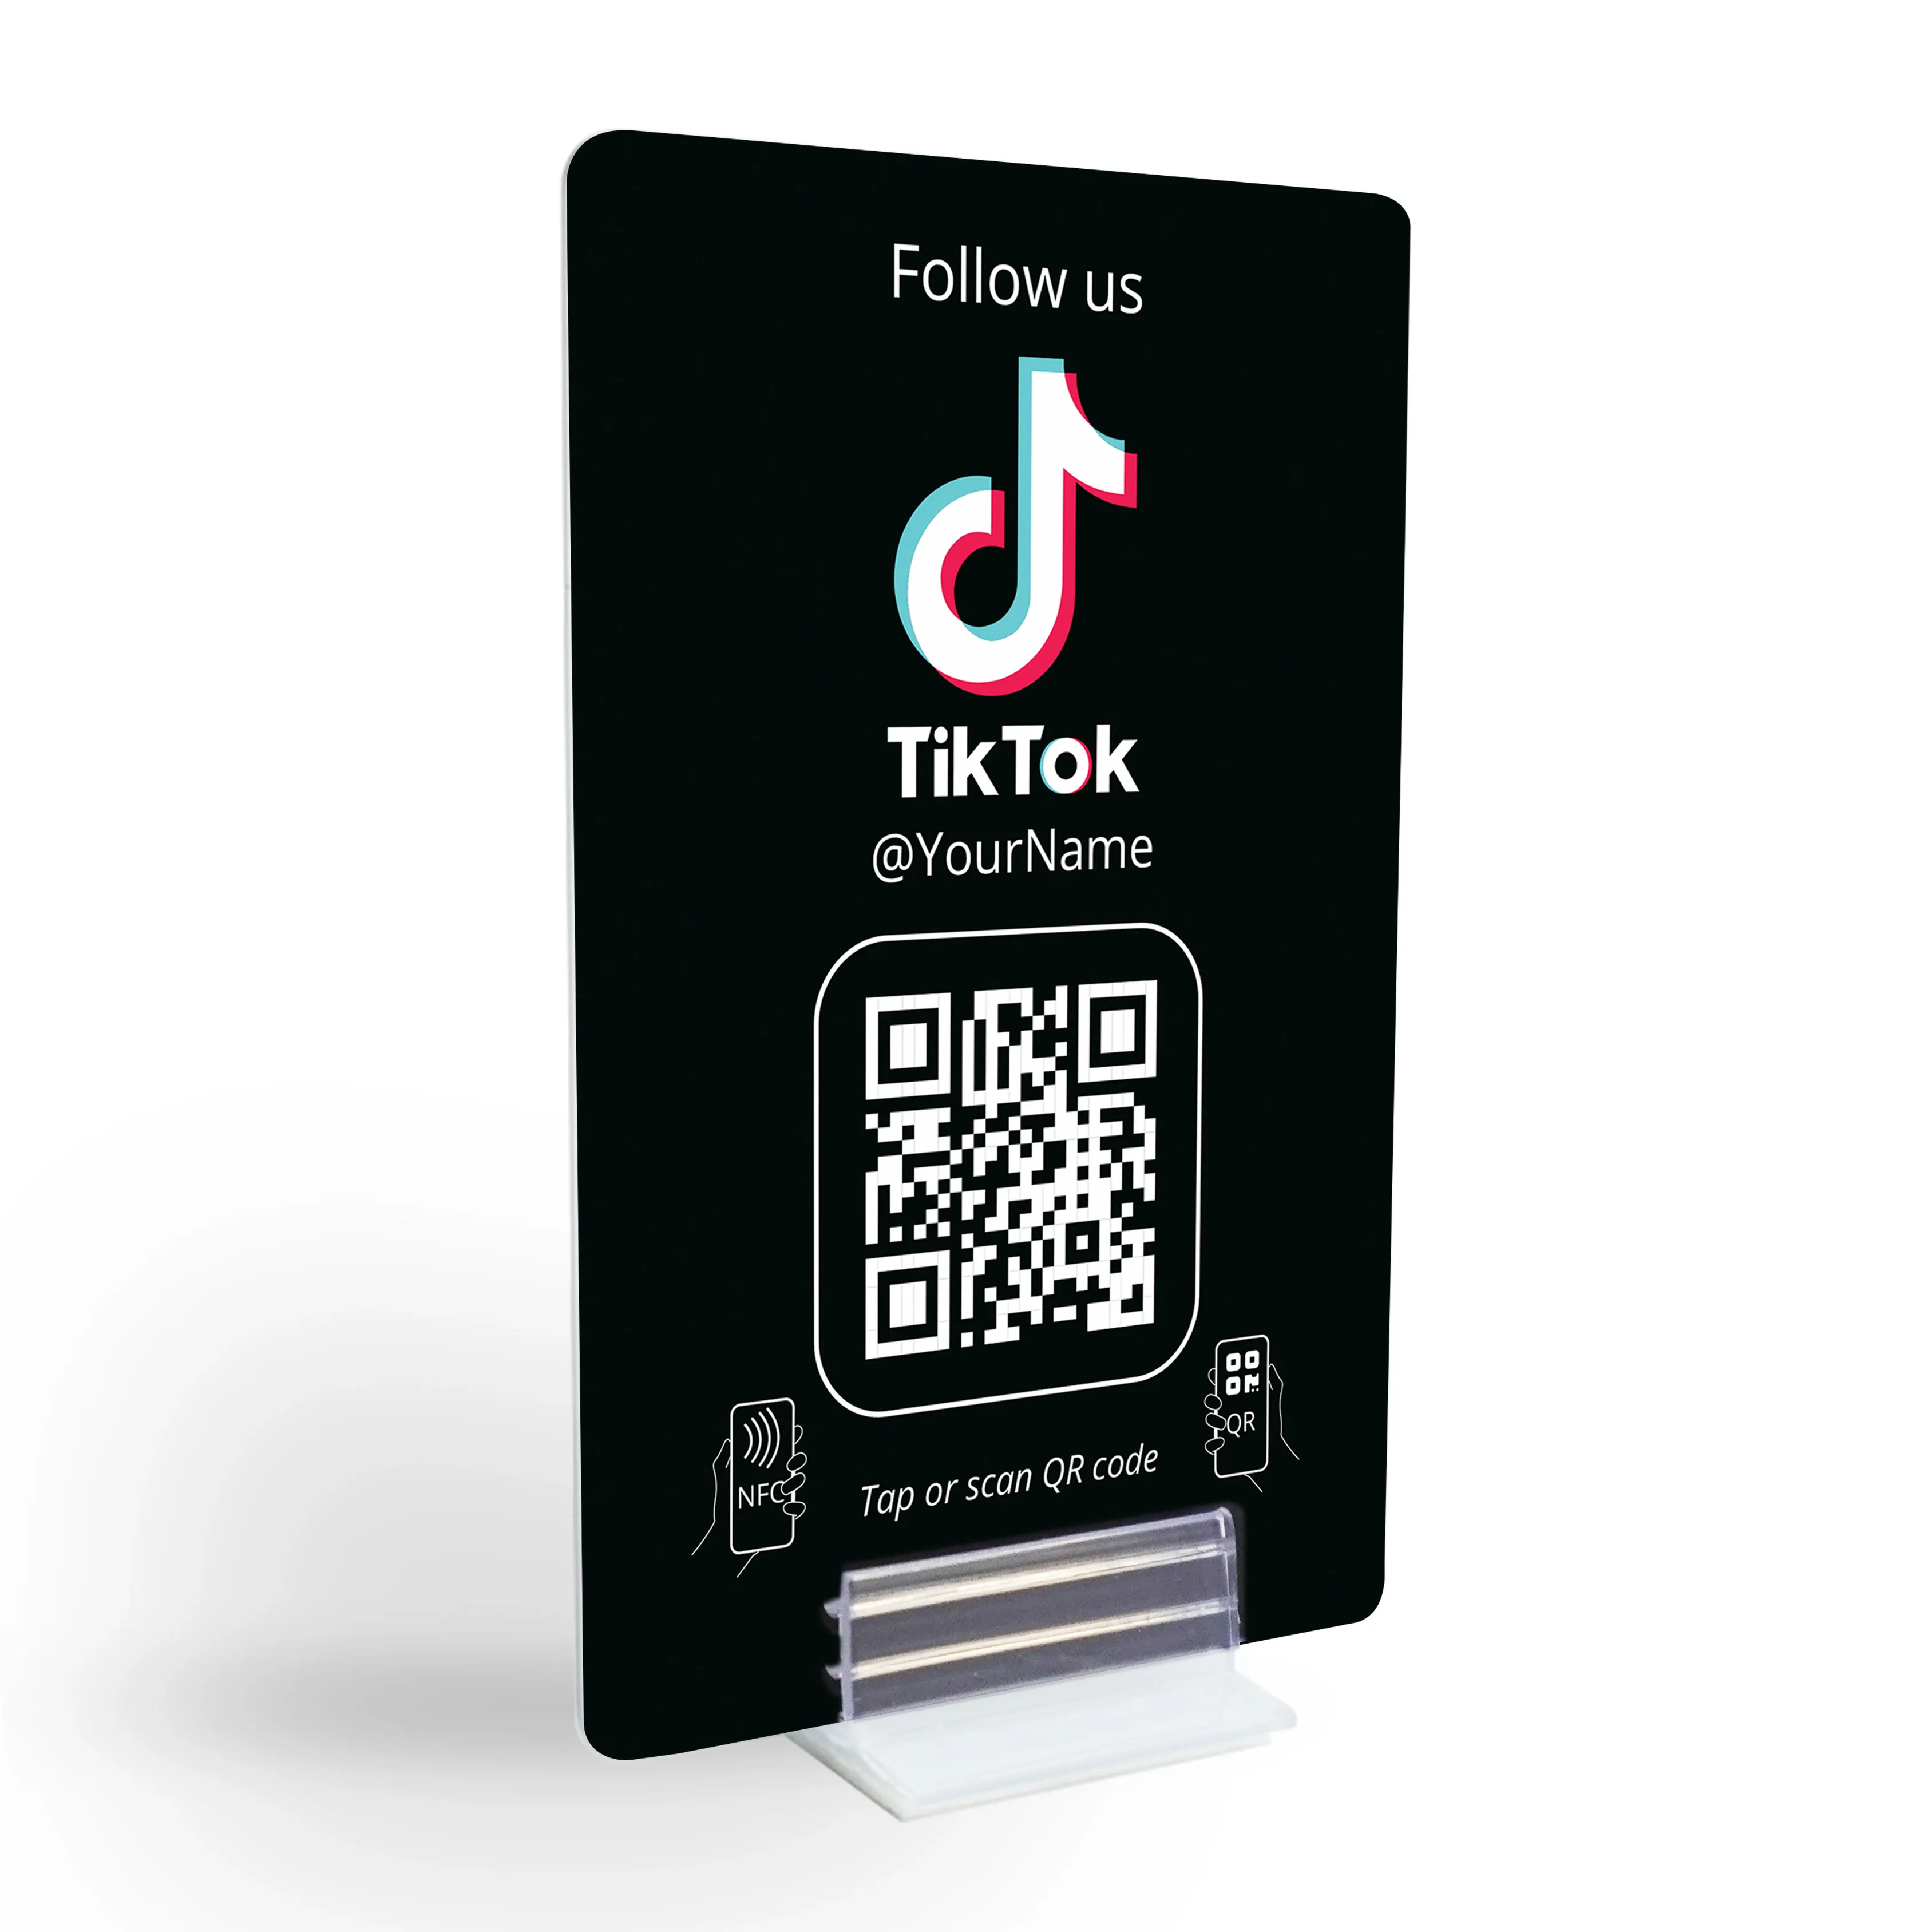 TikTok Growth card - NFC/QR code display for viral reach